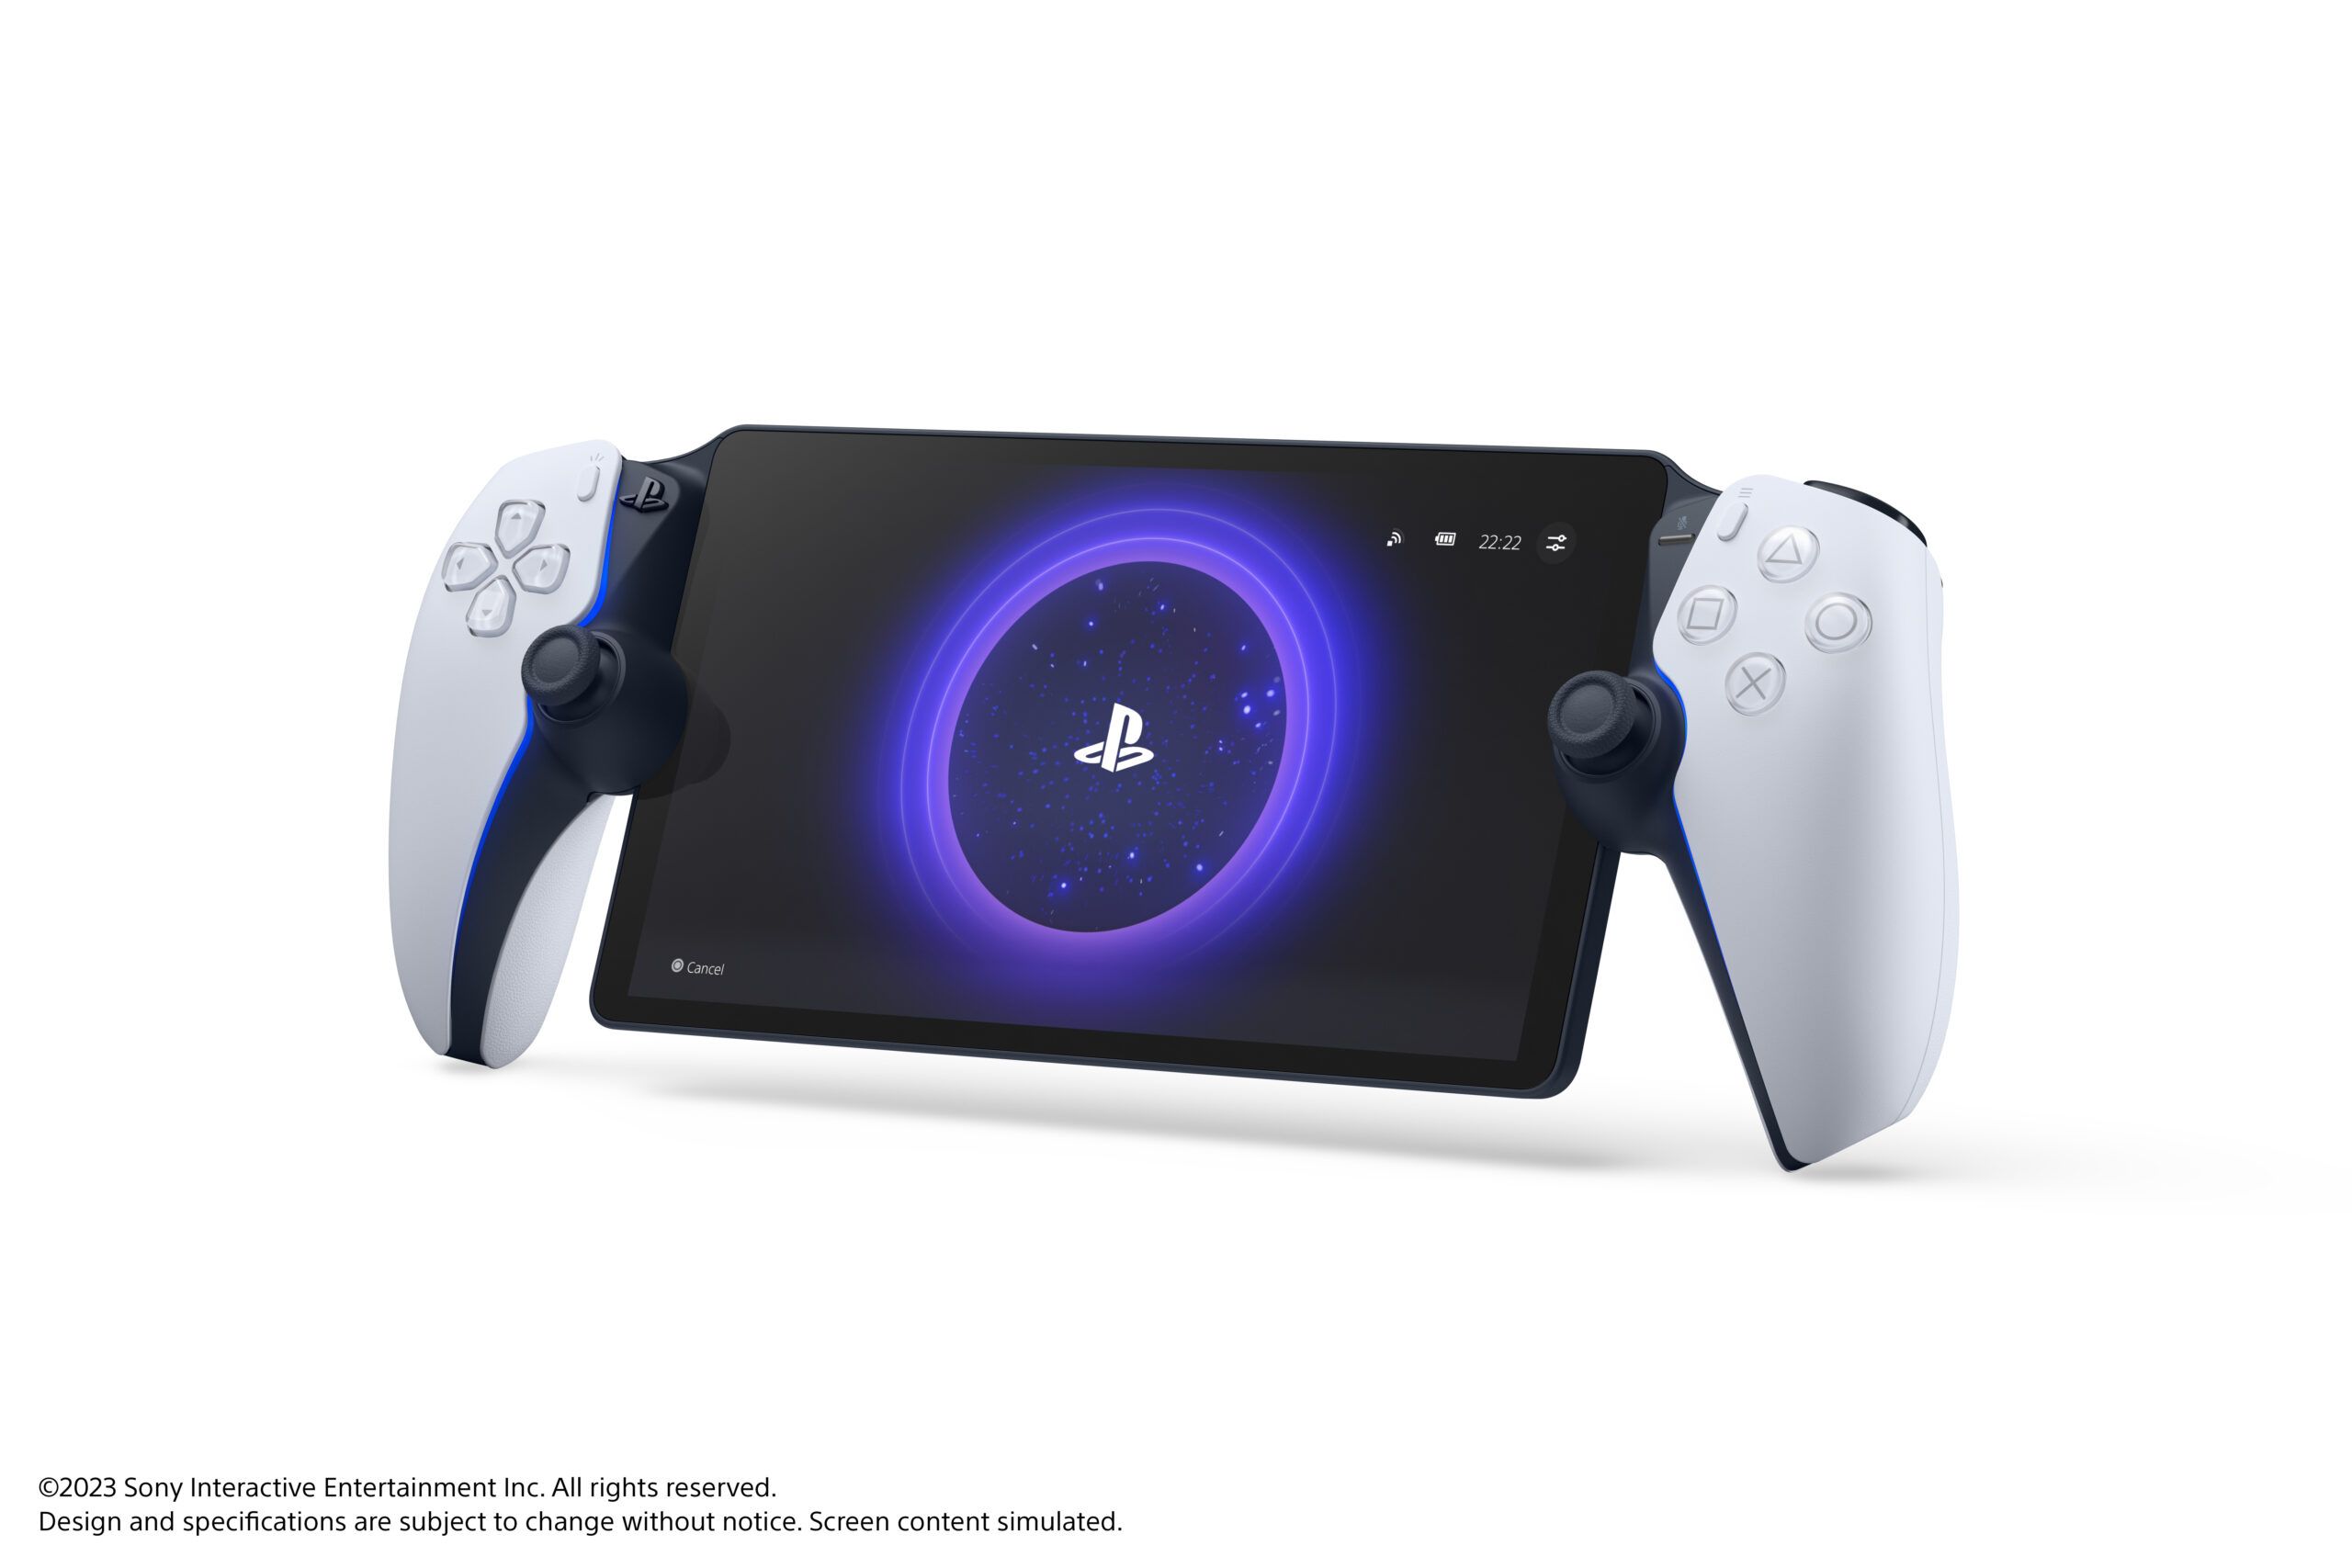 Jogo Sony Deathloop PS5 em Promocao - Primetek